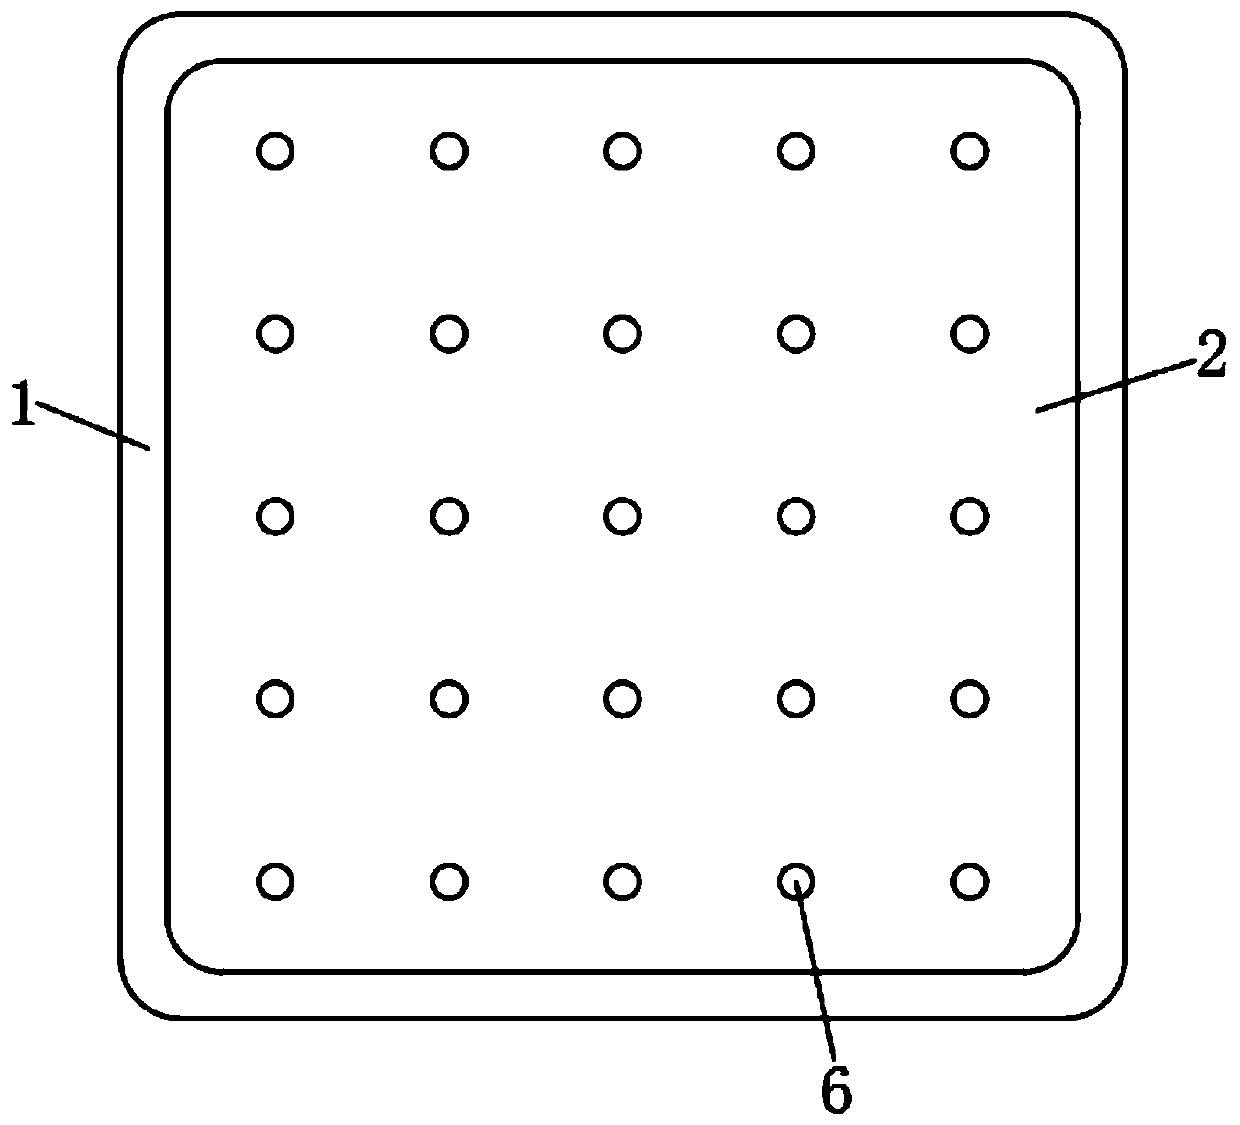 Rotary self-water-absorption floor tile